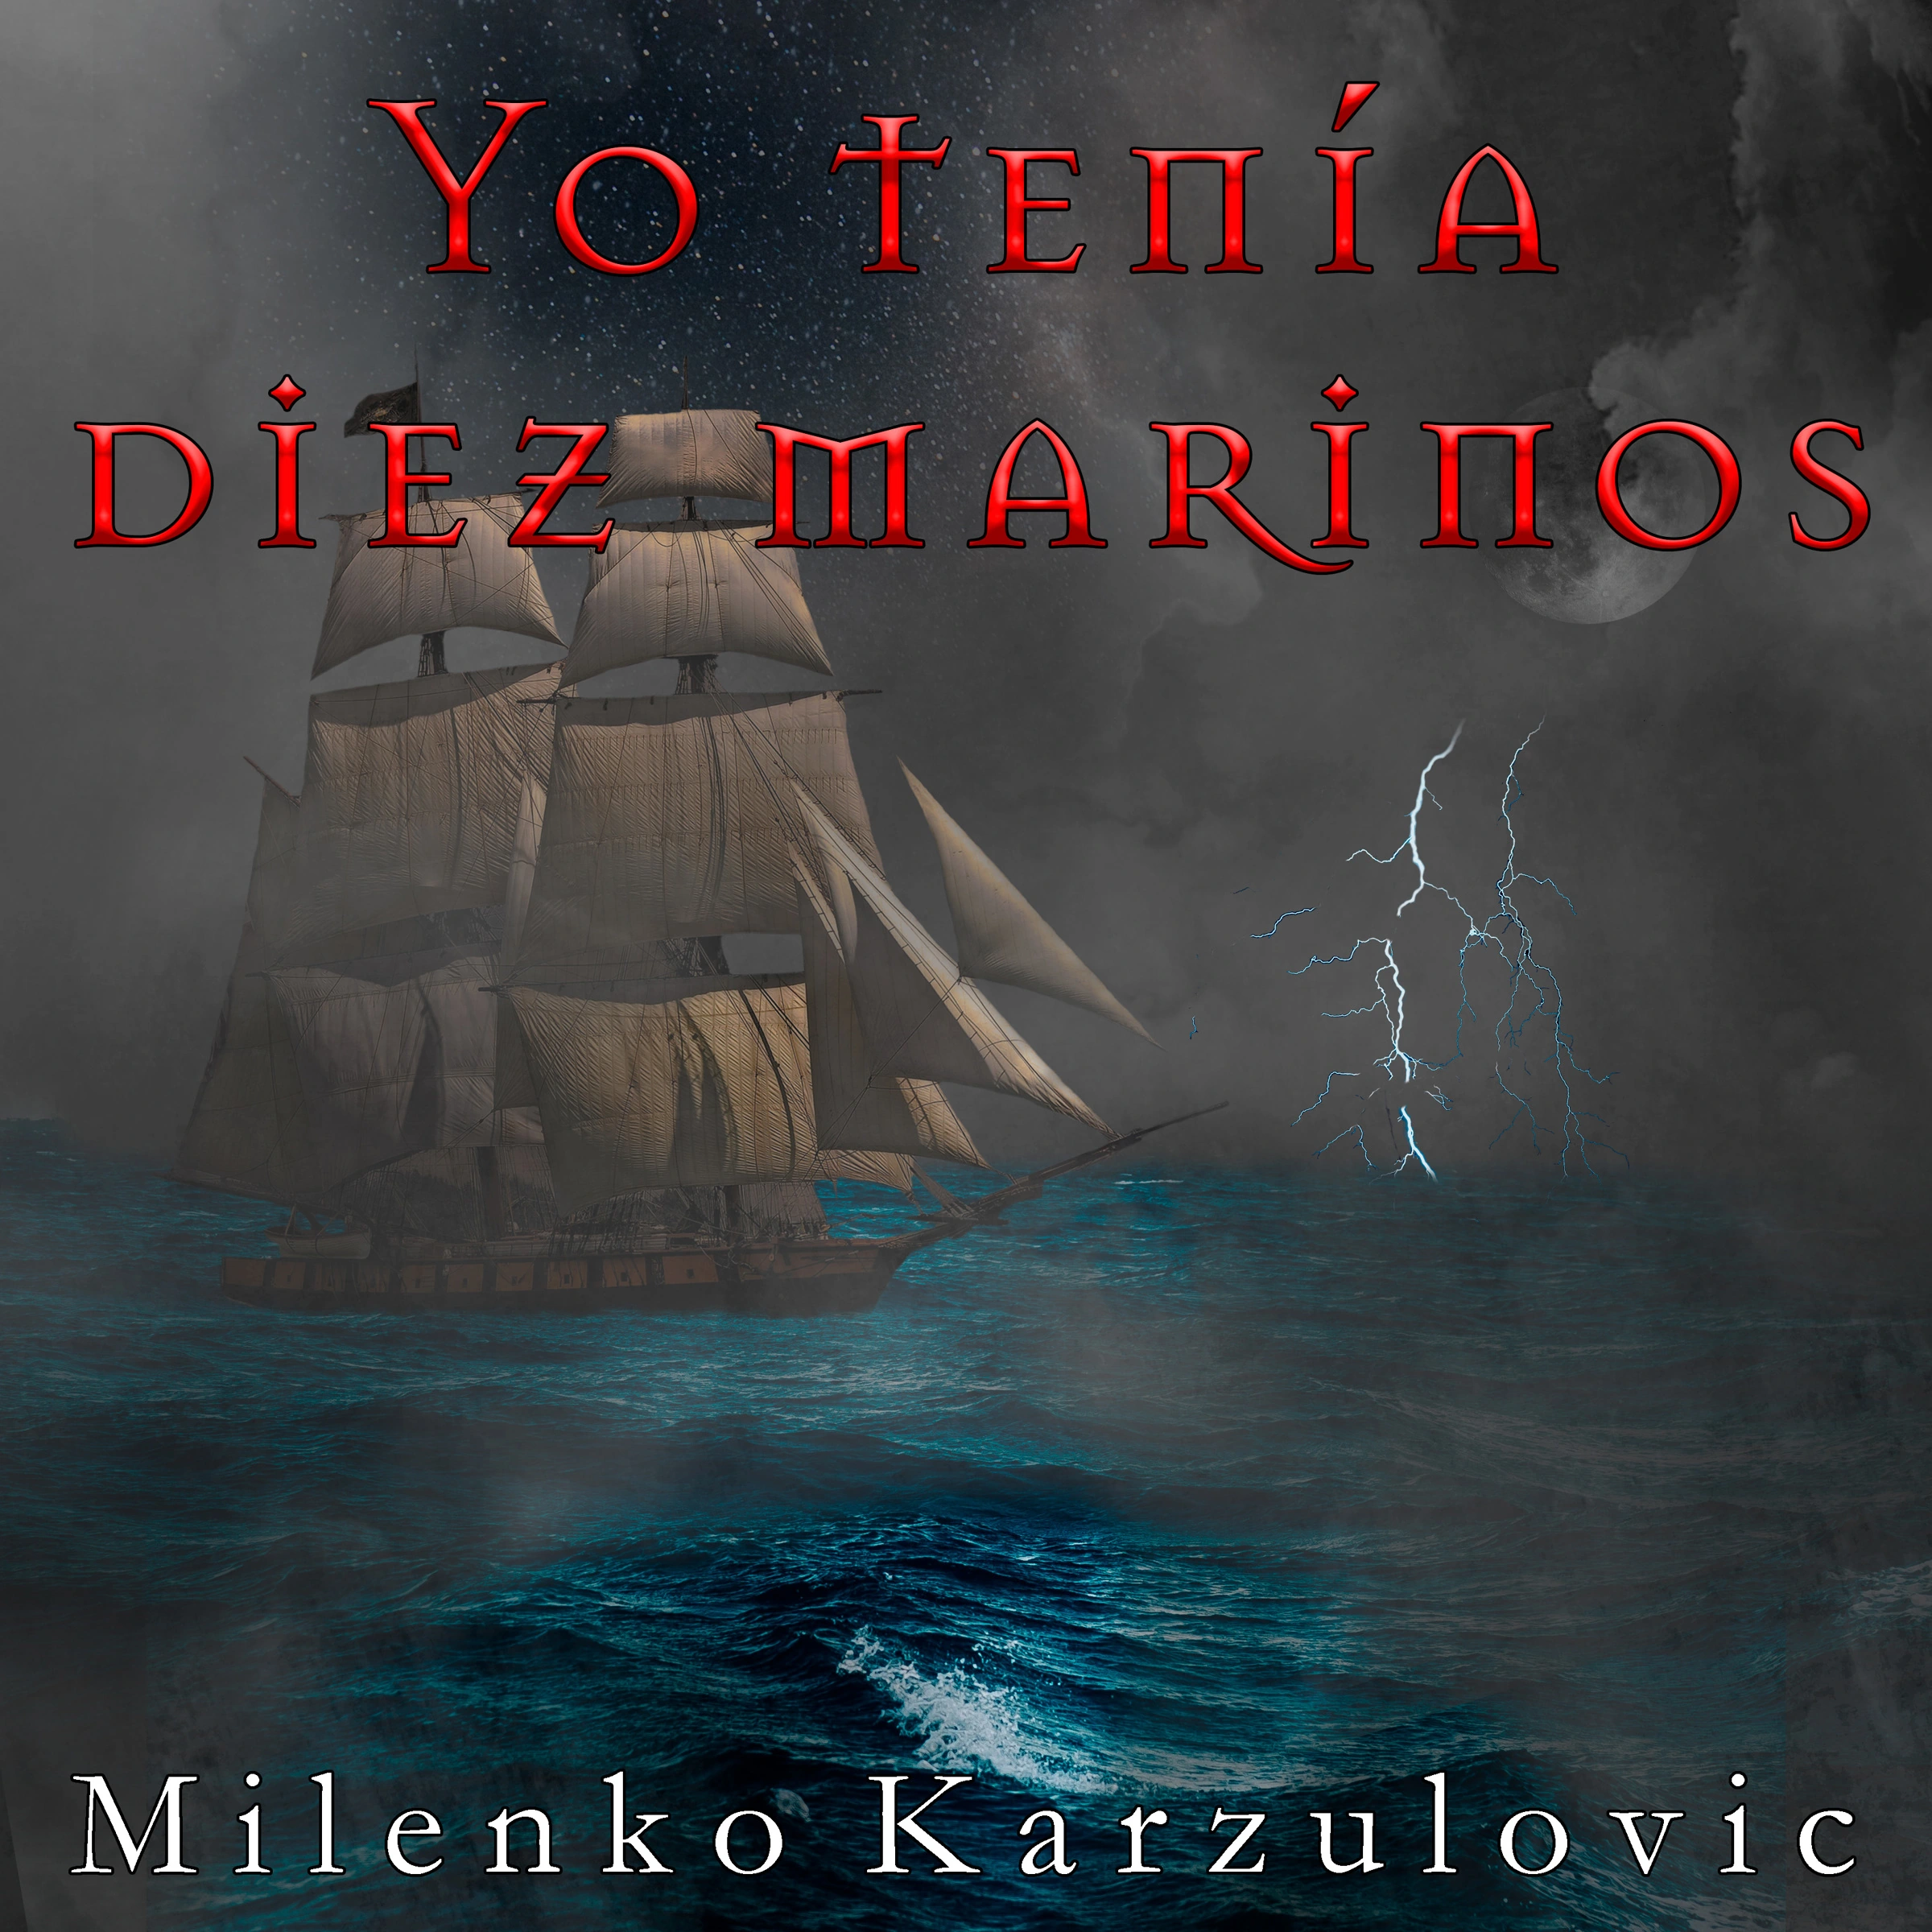 Yo tenía diez marinos Audiobook by Milenko Karzulovic